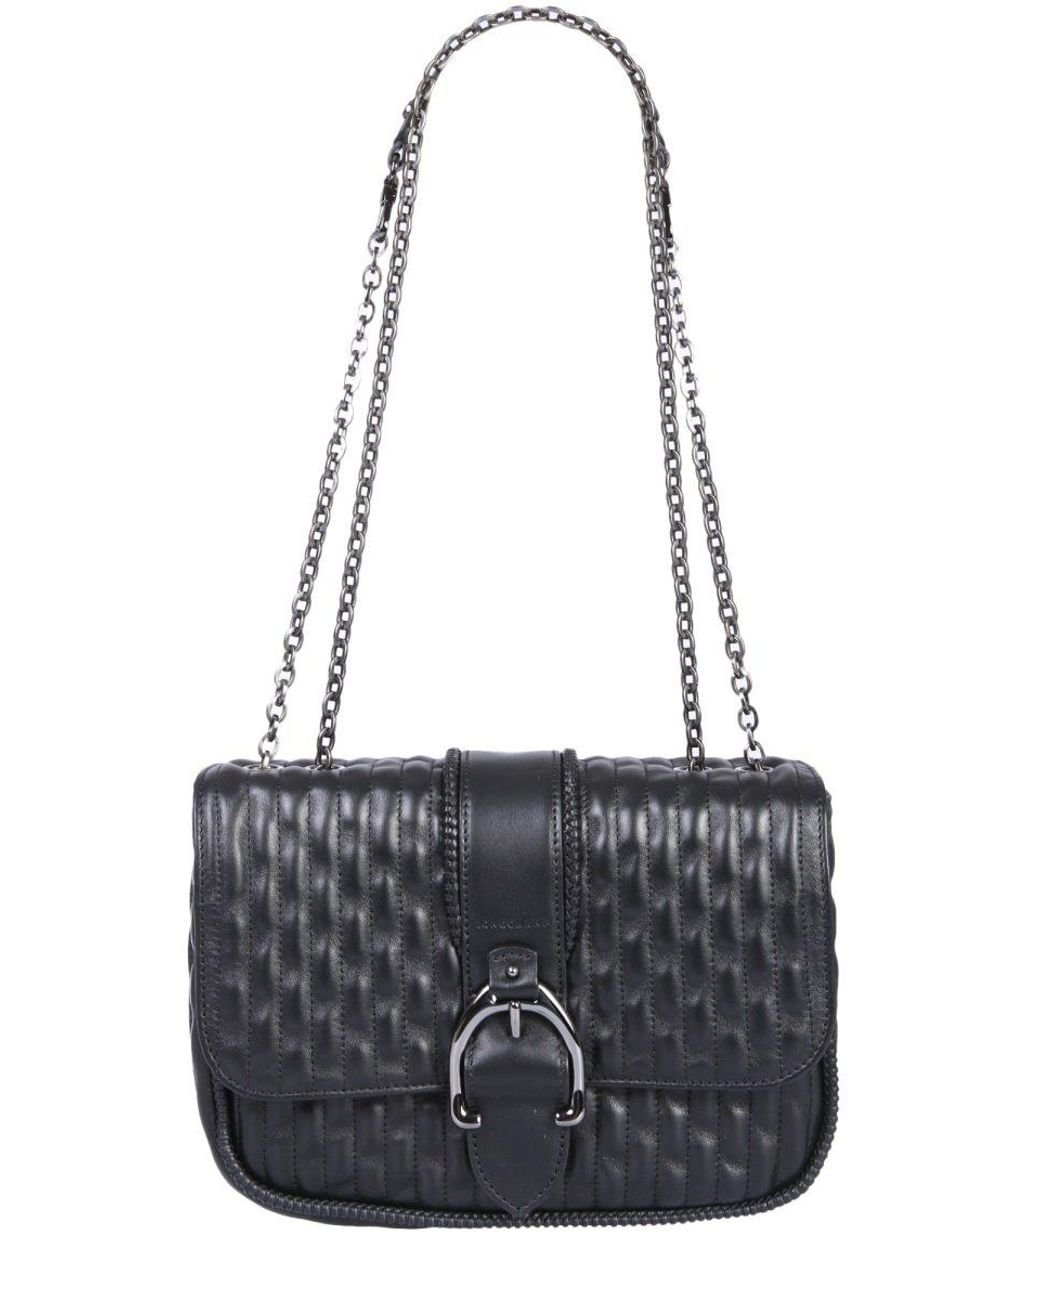 Longchamp Small Chain Amazon Shoulder Bag in Black | Lyst